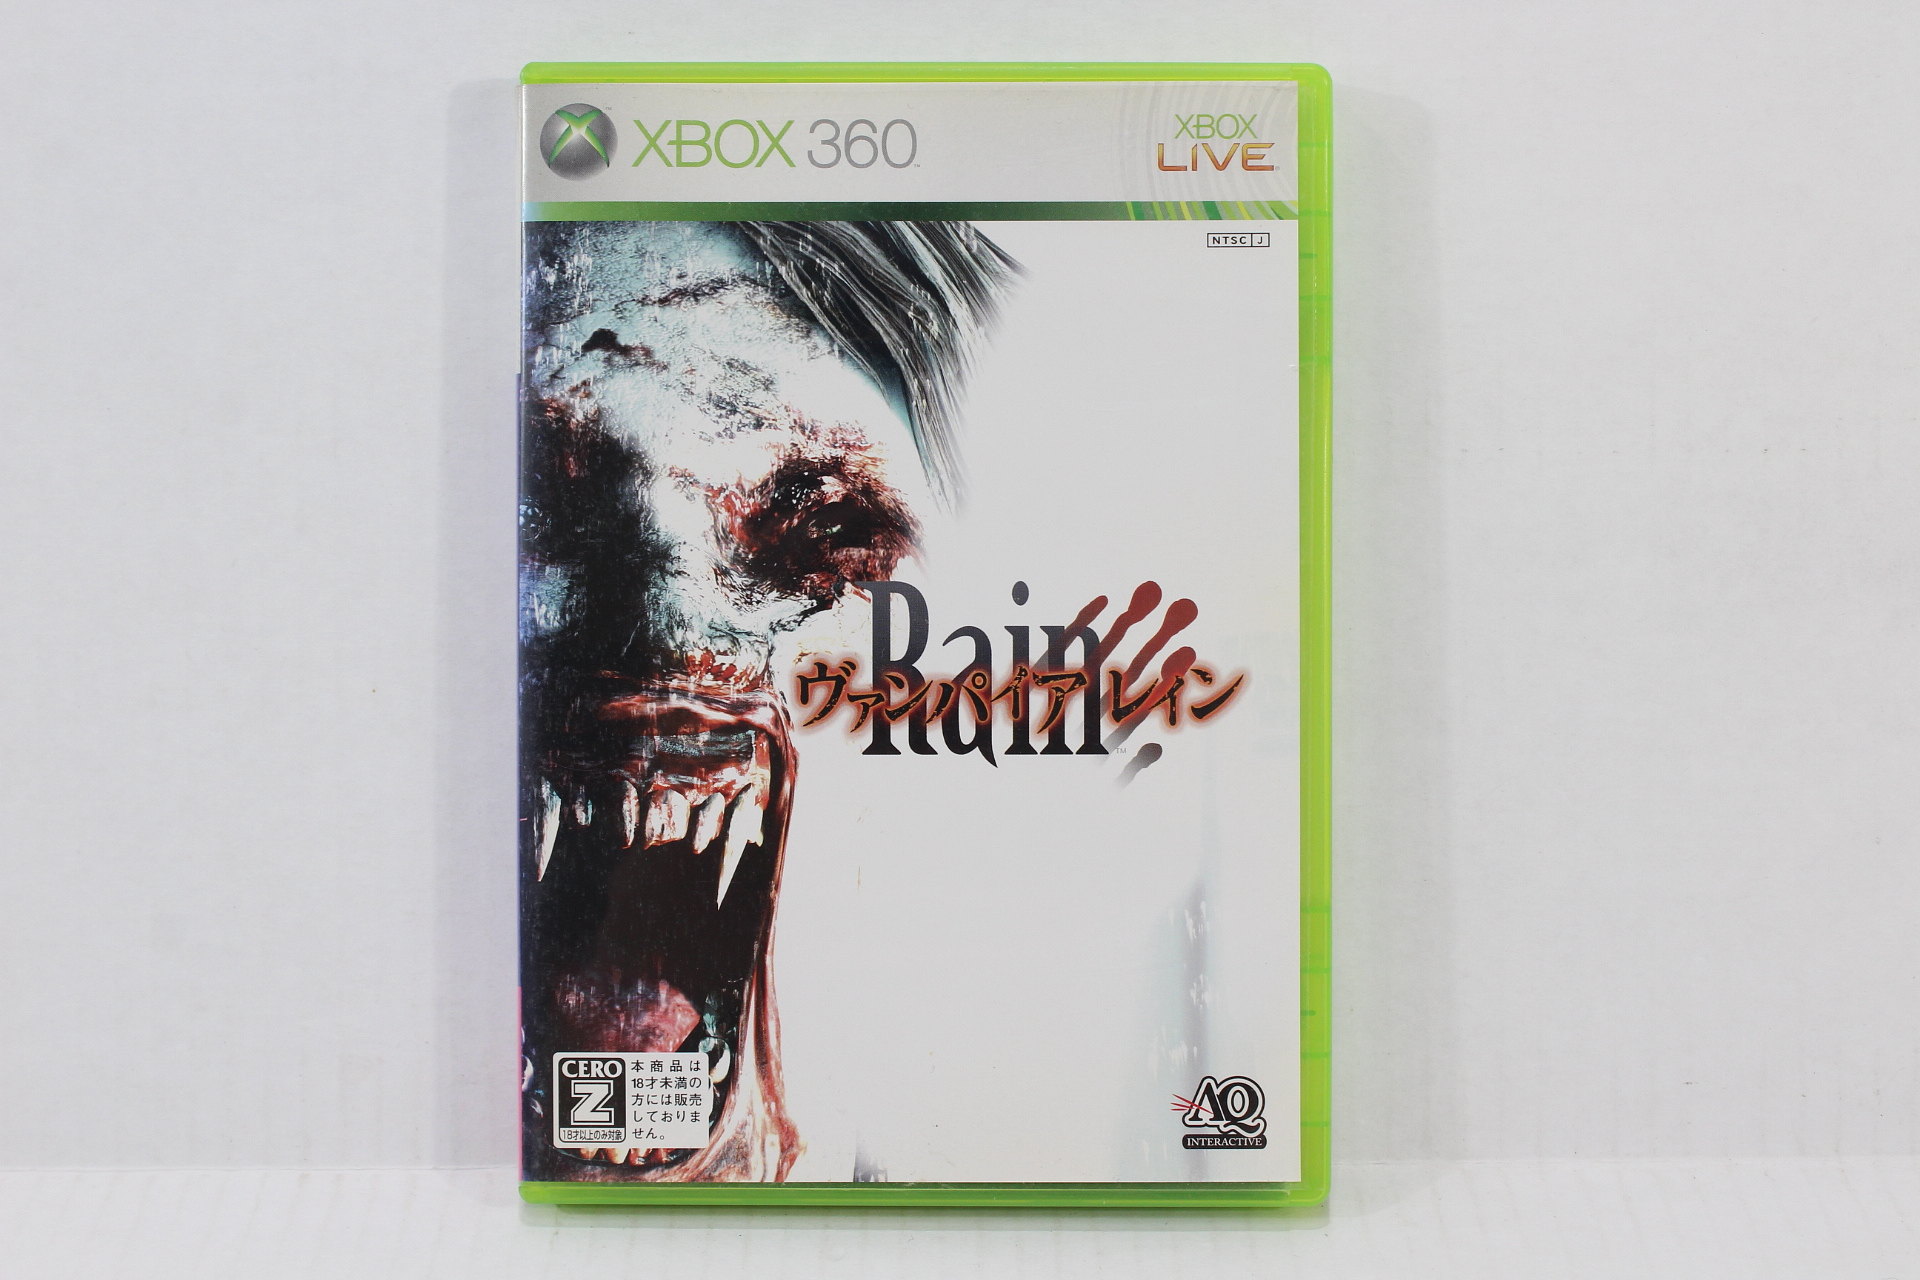 Jogo Vampire Rain - Xbox 360 - MeuGameUsado